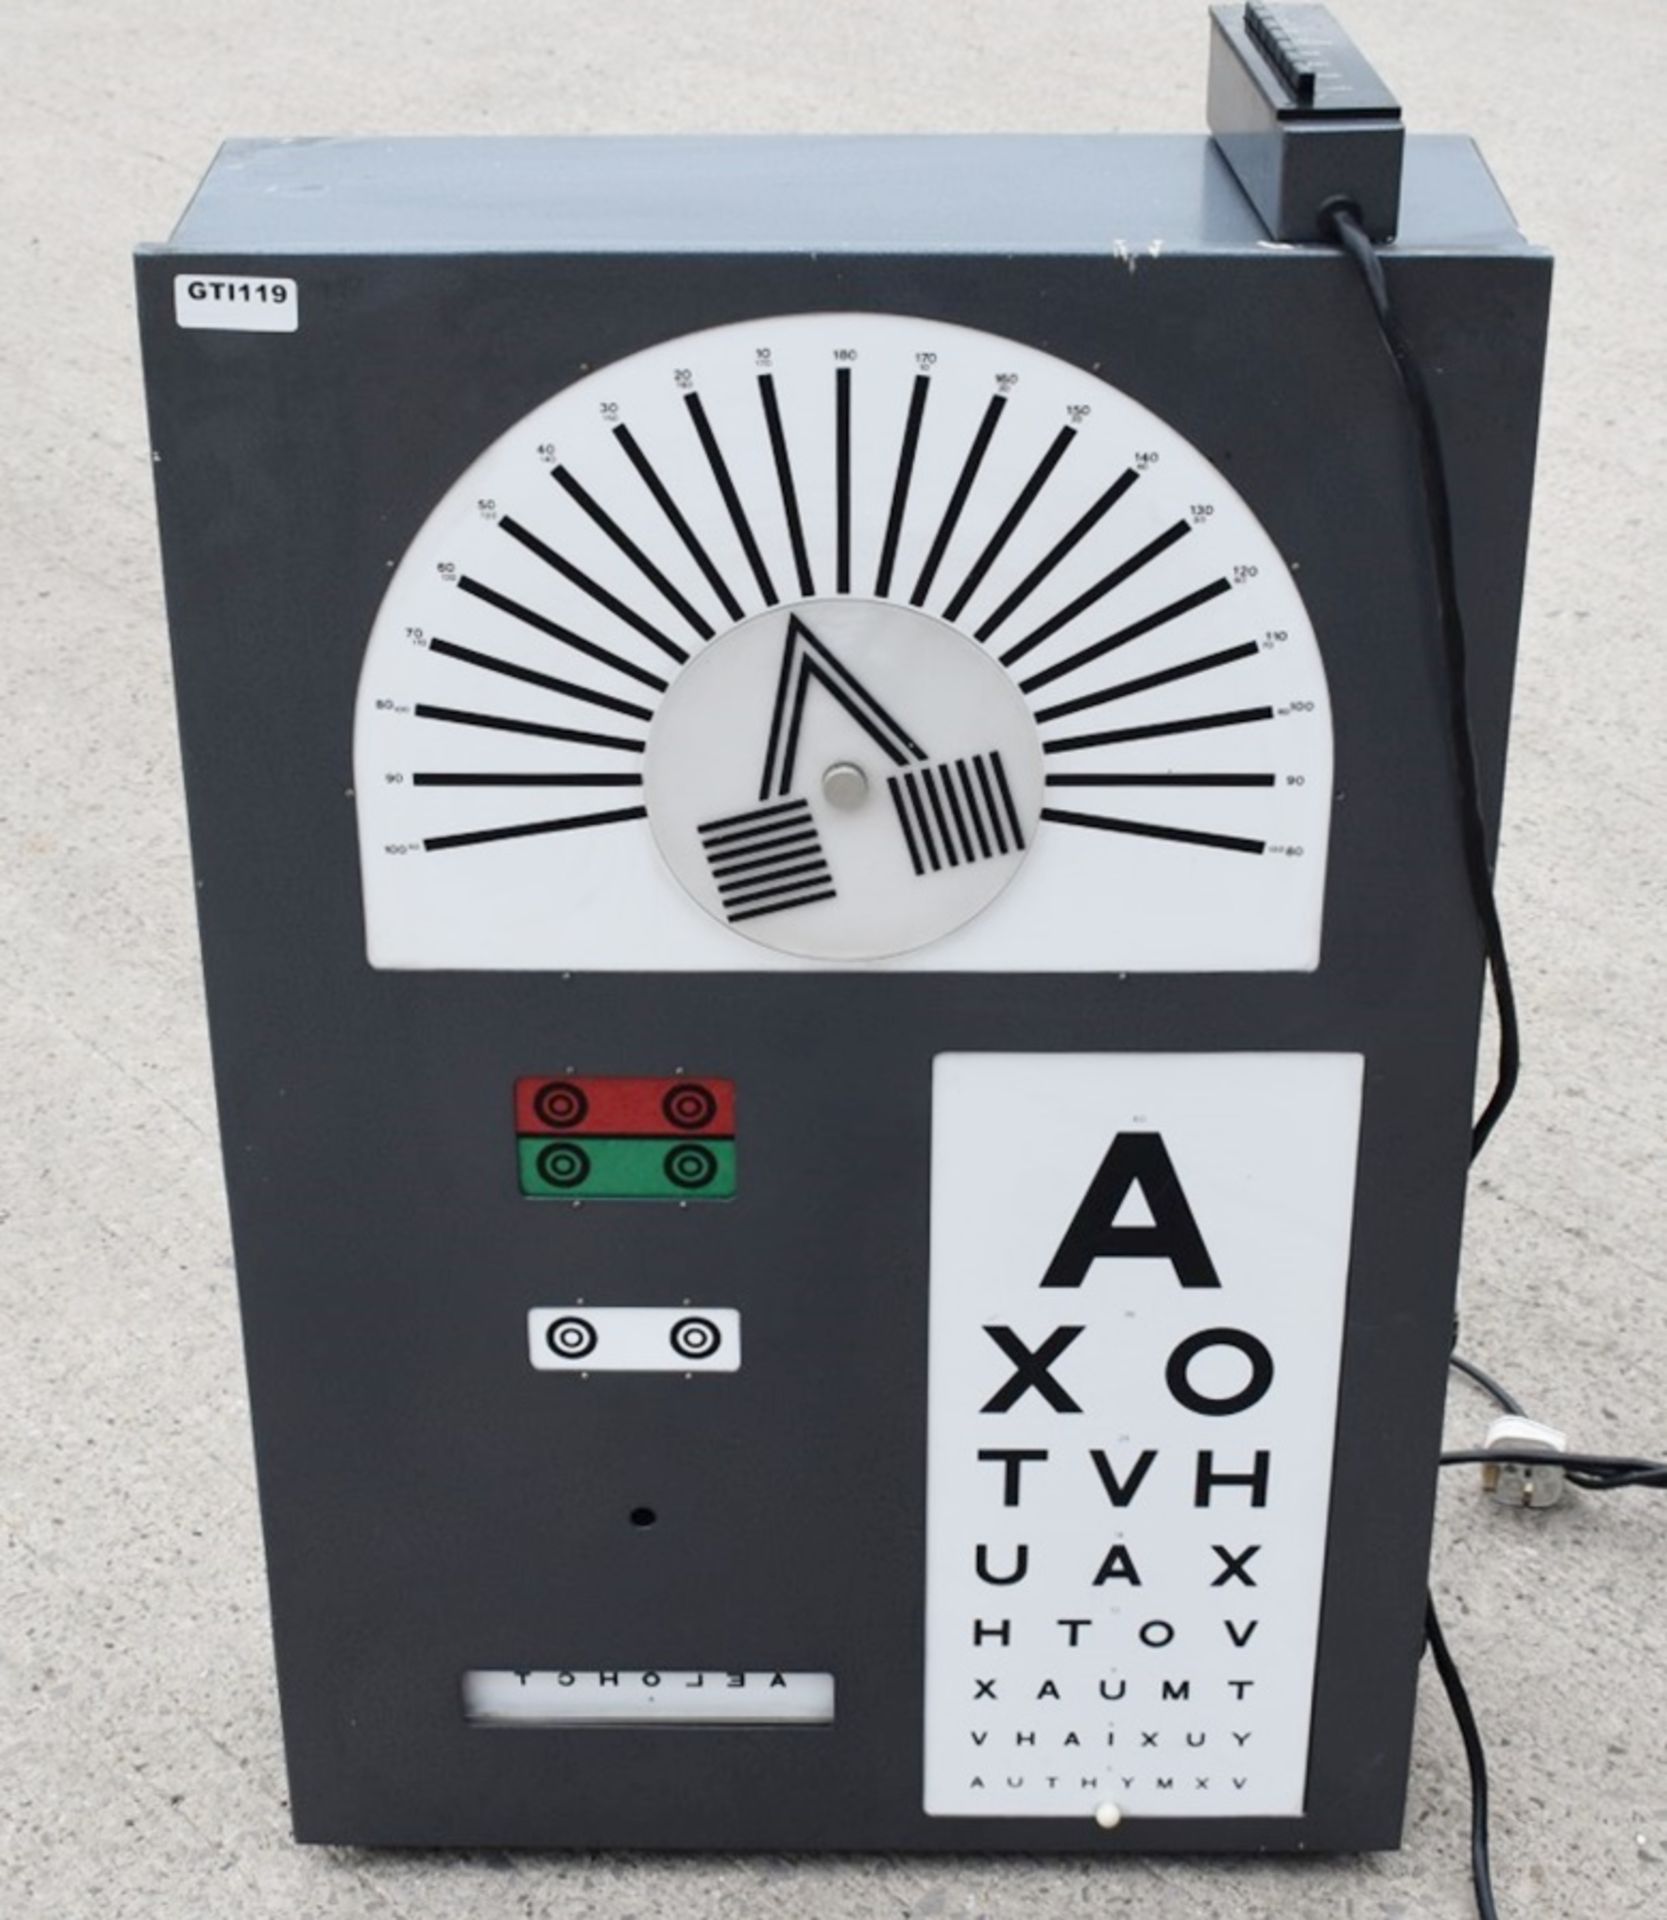 1 x Opticians Vintage Eye Test Chart Light Box - 240v - Size H87 x W59 x D19 cms - Ref: GTI119 -